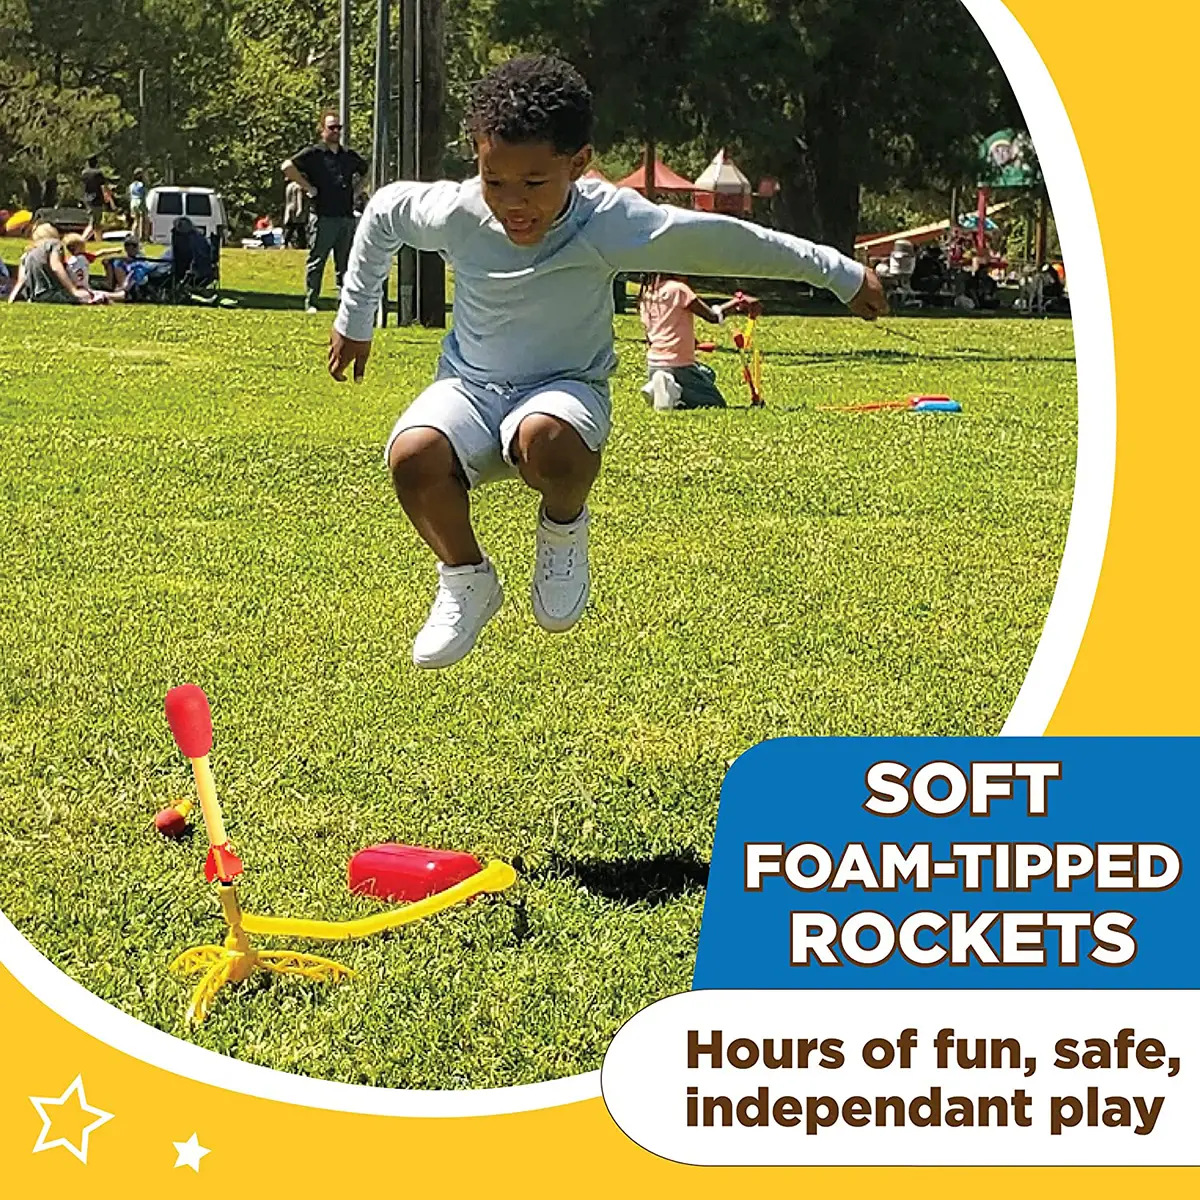 Stomp Rocket Original Ultra Car Launcher For Kids of Age 5Y+, Multicolour